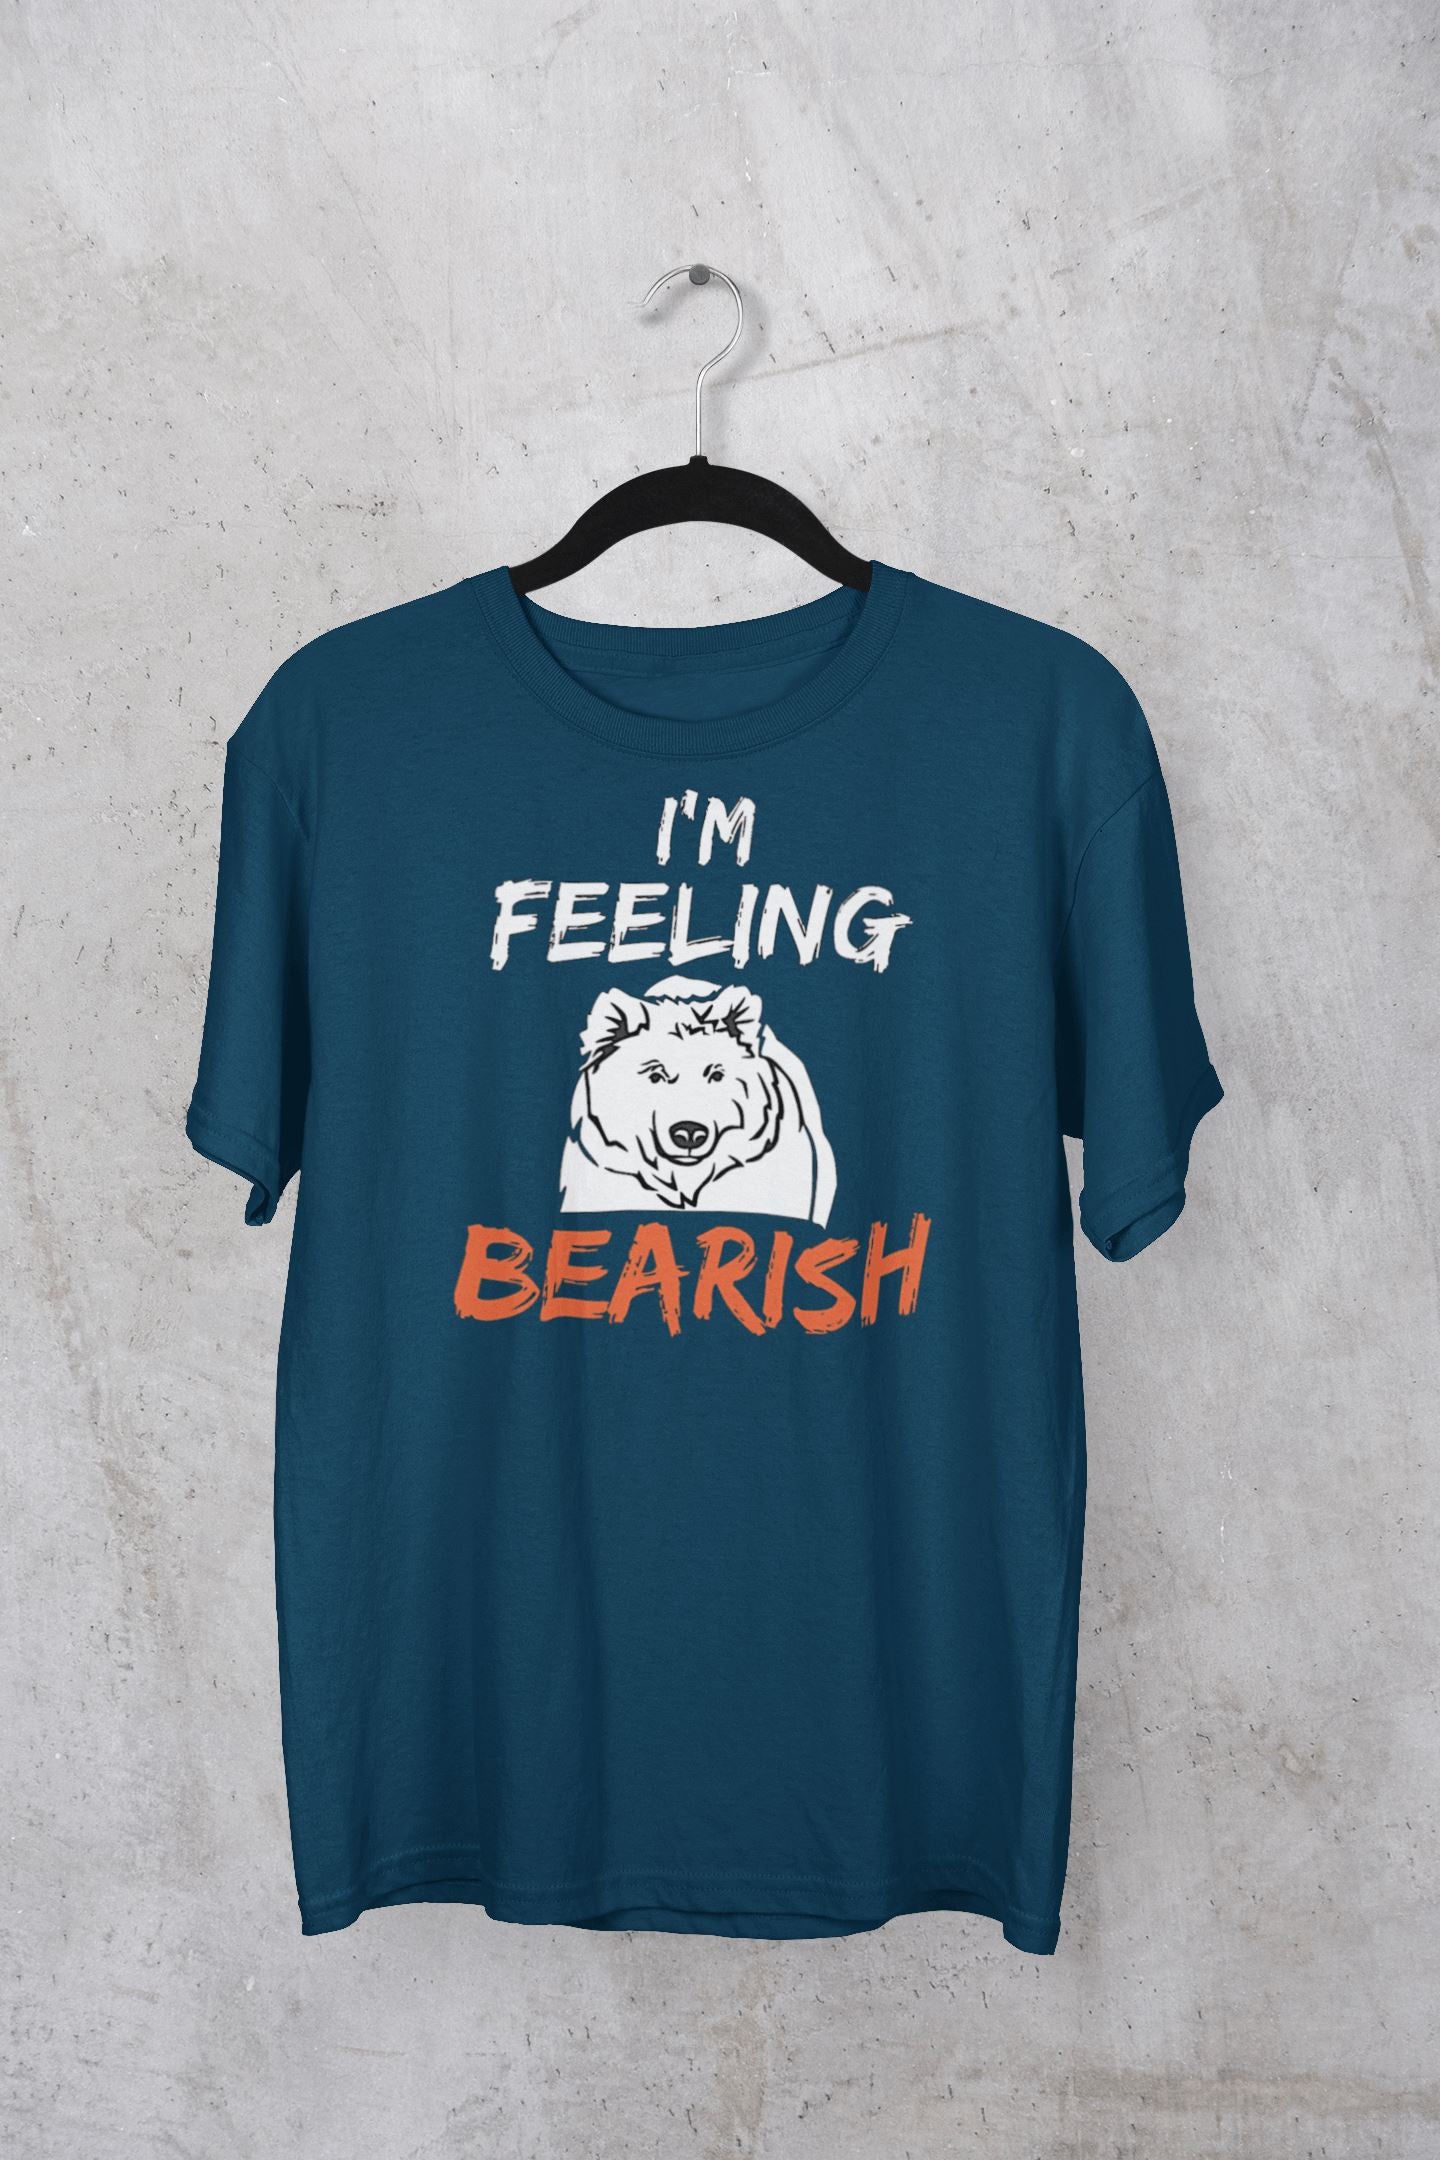 I'm Feeling Bearish Special Navy Blue T Shirt for Men and Women - Catch My Drift India  bearish, bullish, clothing, female, general, made in india, navy blue, shirt, stock market, t shirt, tr